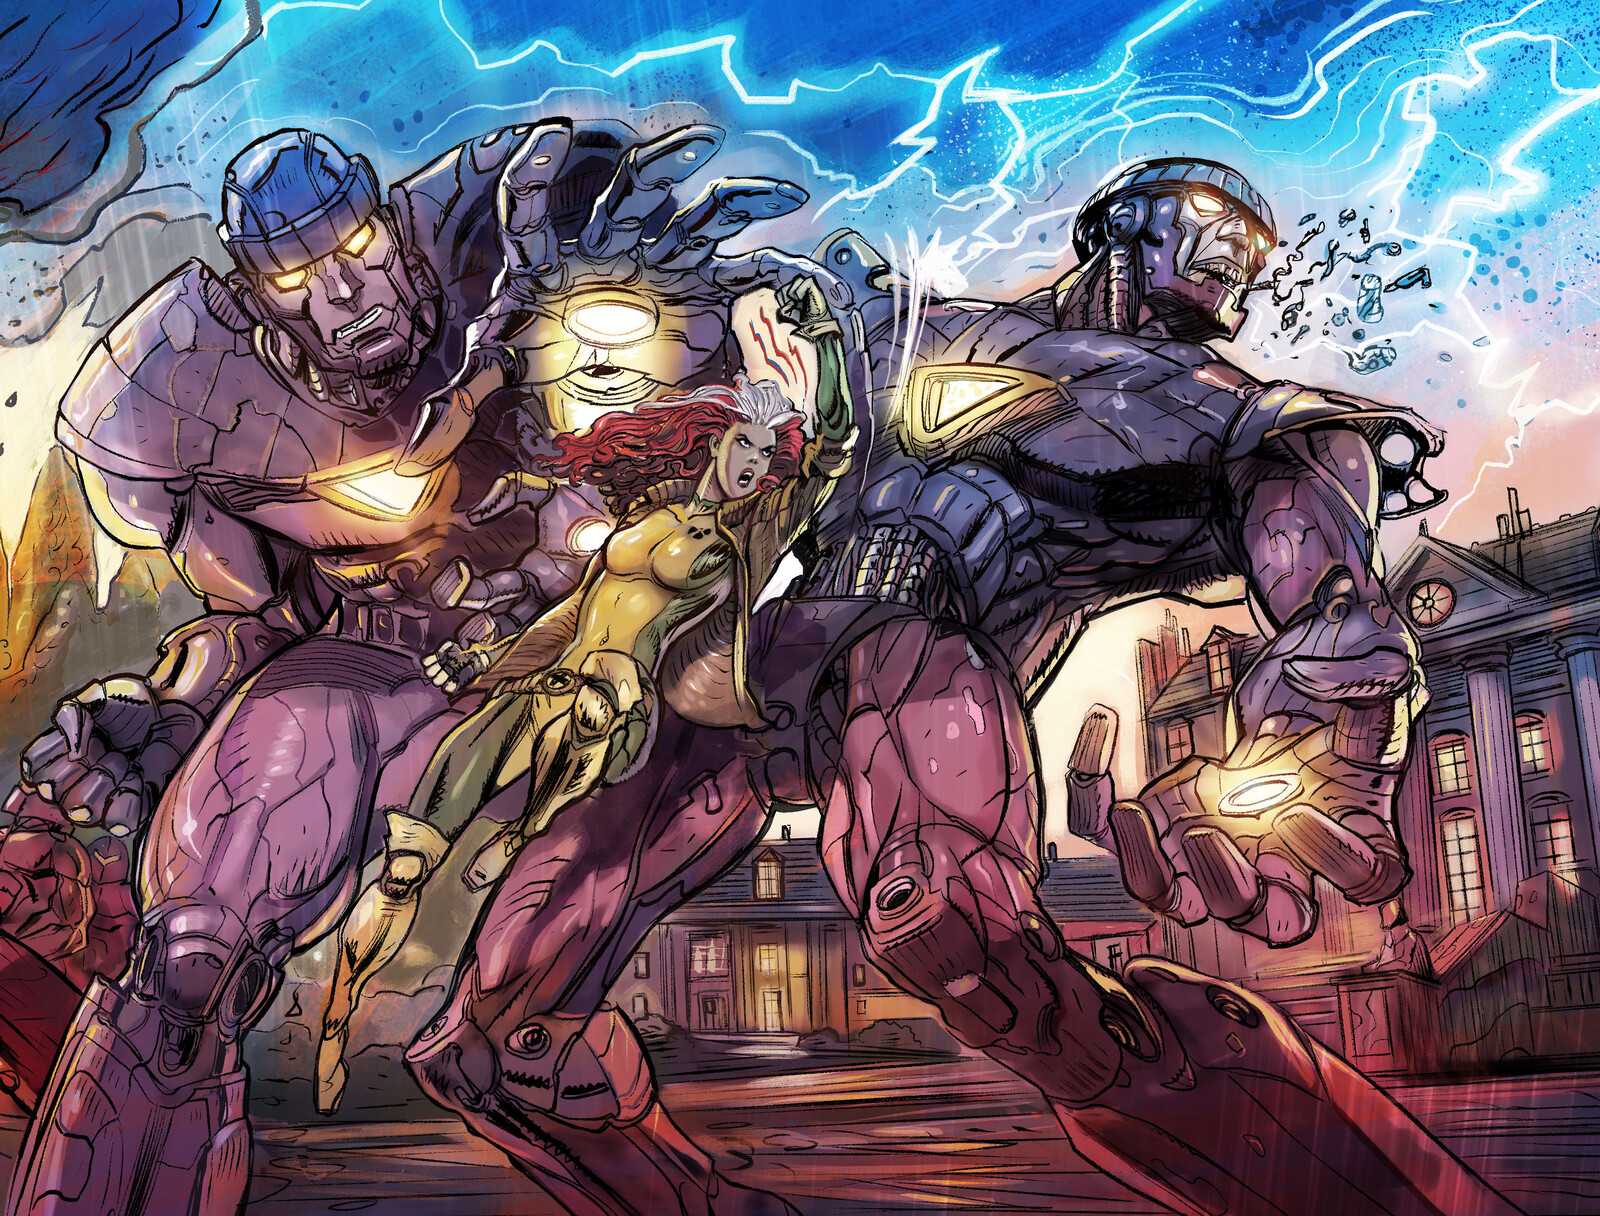 X-Men - Mutant Insurrection: Emma Frost Showdown (3 panels)